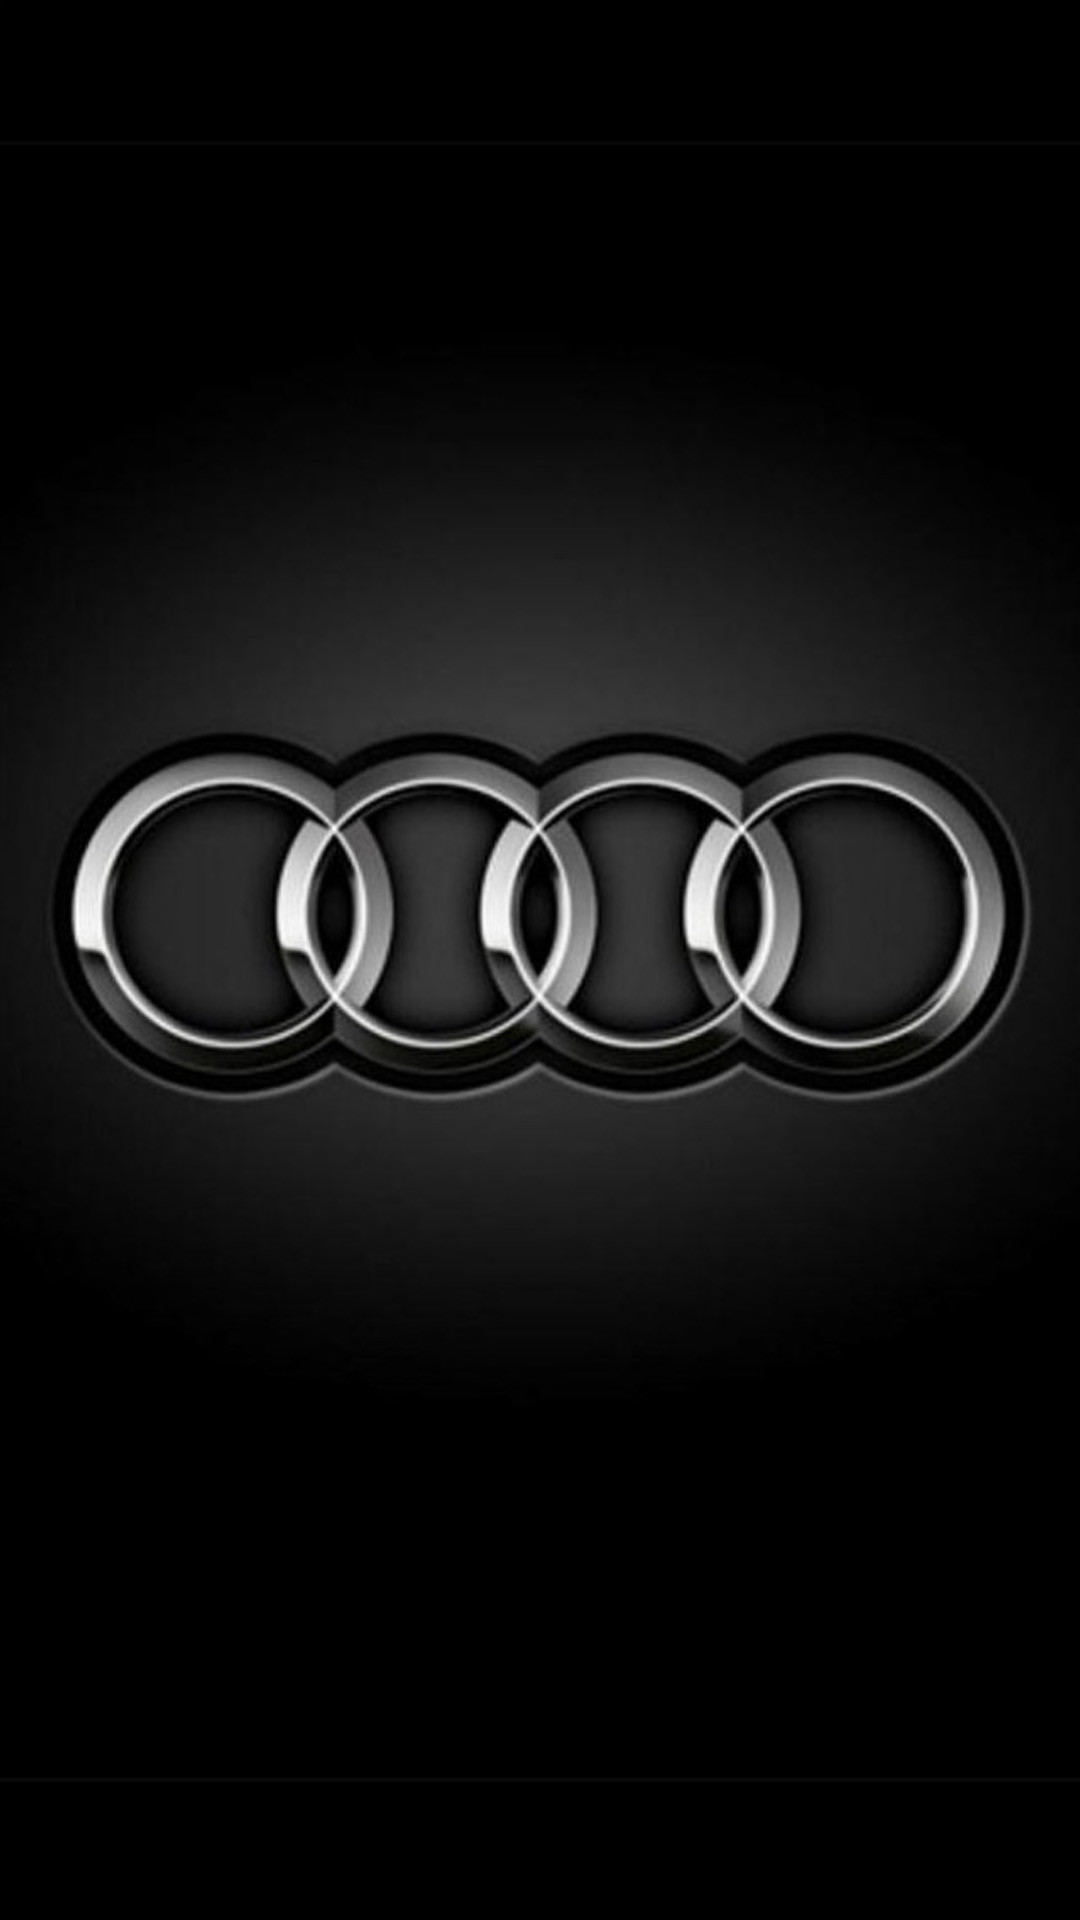 1080x1920 Audi LOGO Galaxy Note 3 Wallpapers